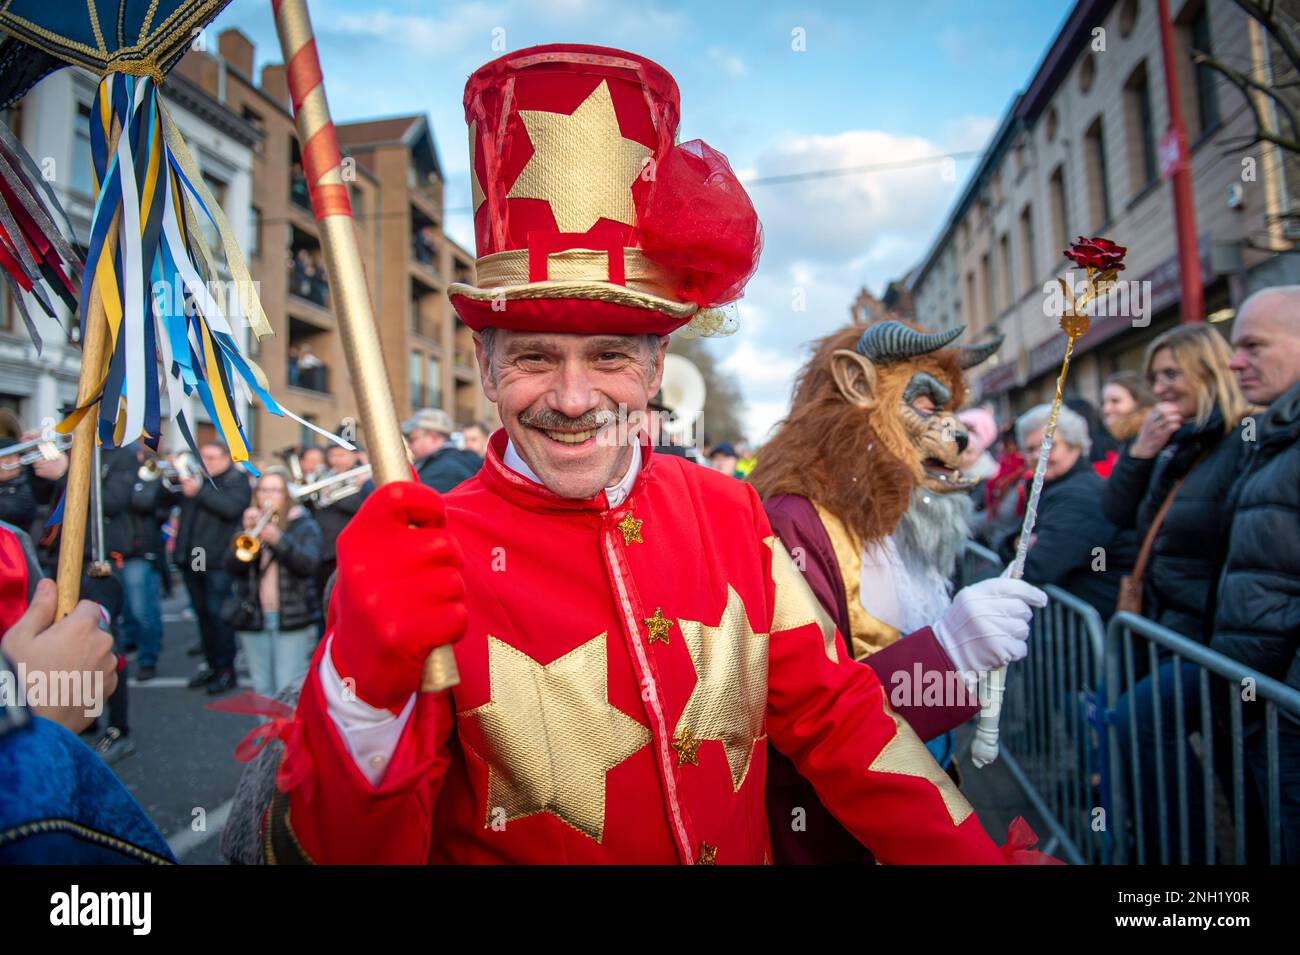 Carnaval de Binche dimanche gras Stock Photo - Alamy